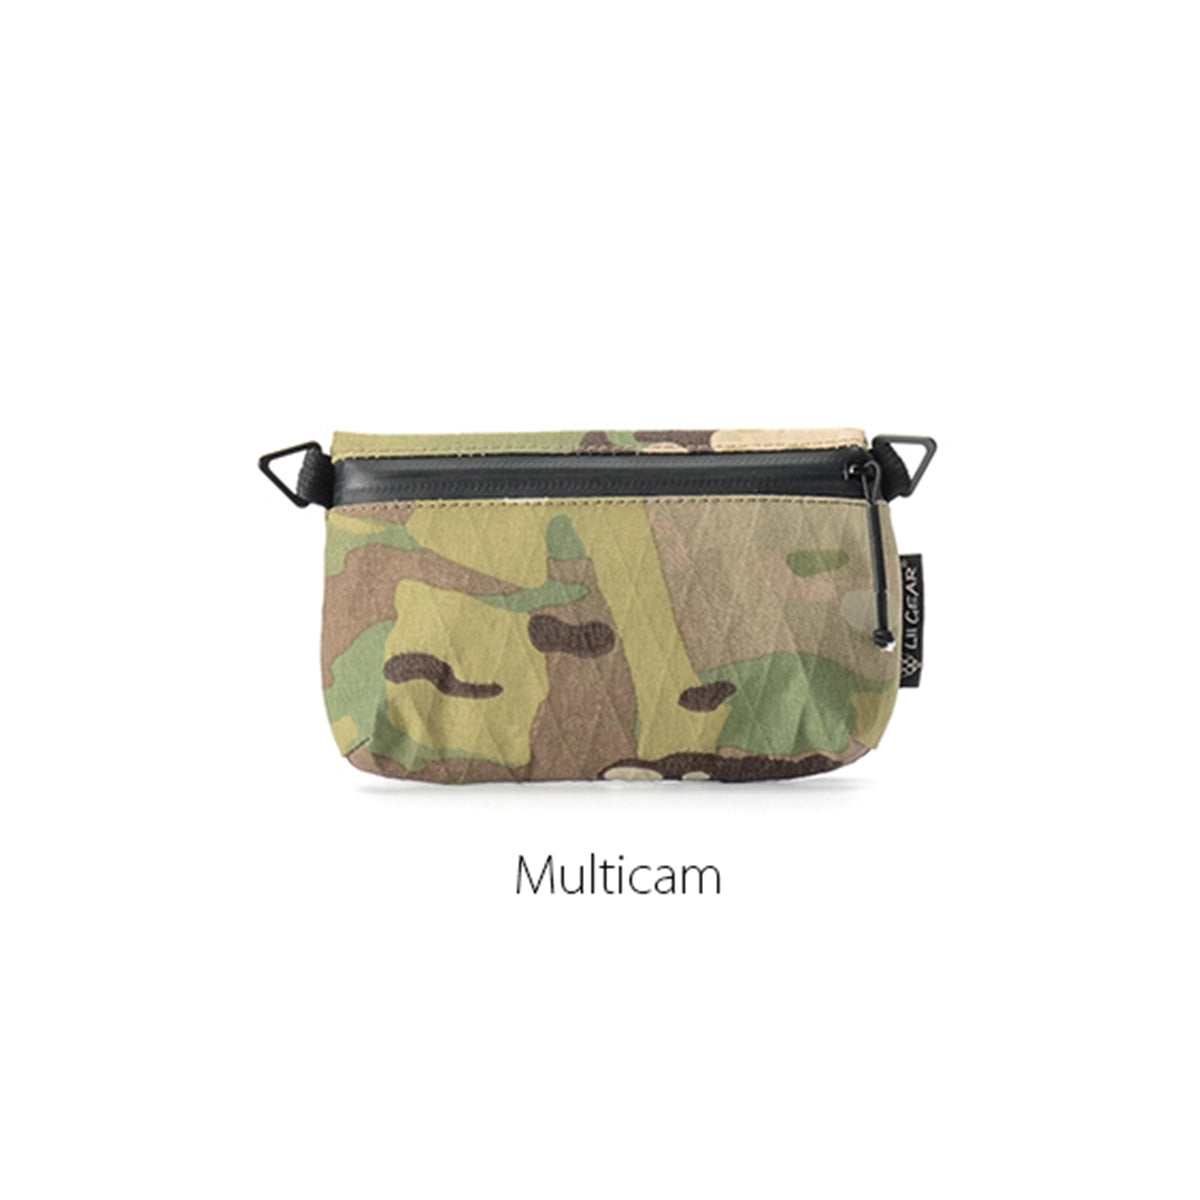 Lii Gear Edc Mini Storage Bag Edc Gear Daily Leisure Portable Miscellaneous Bag Multicam